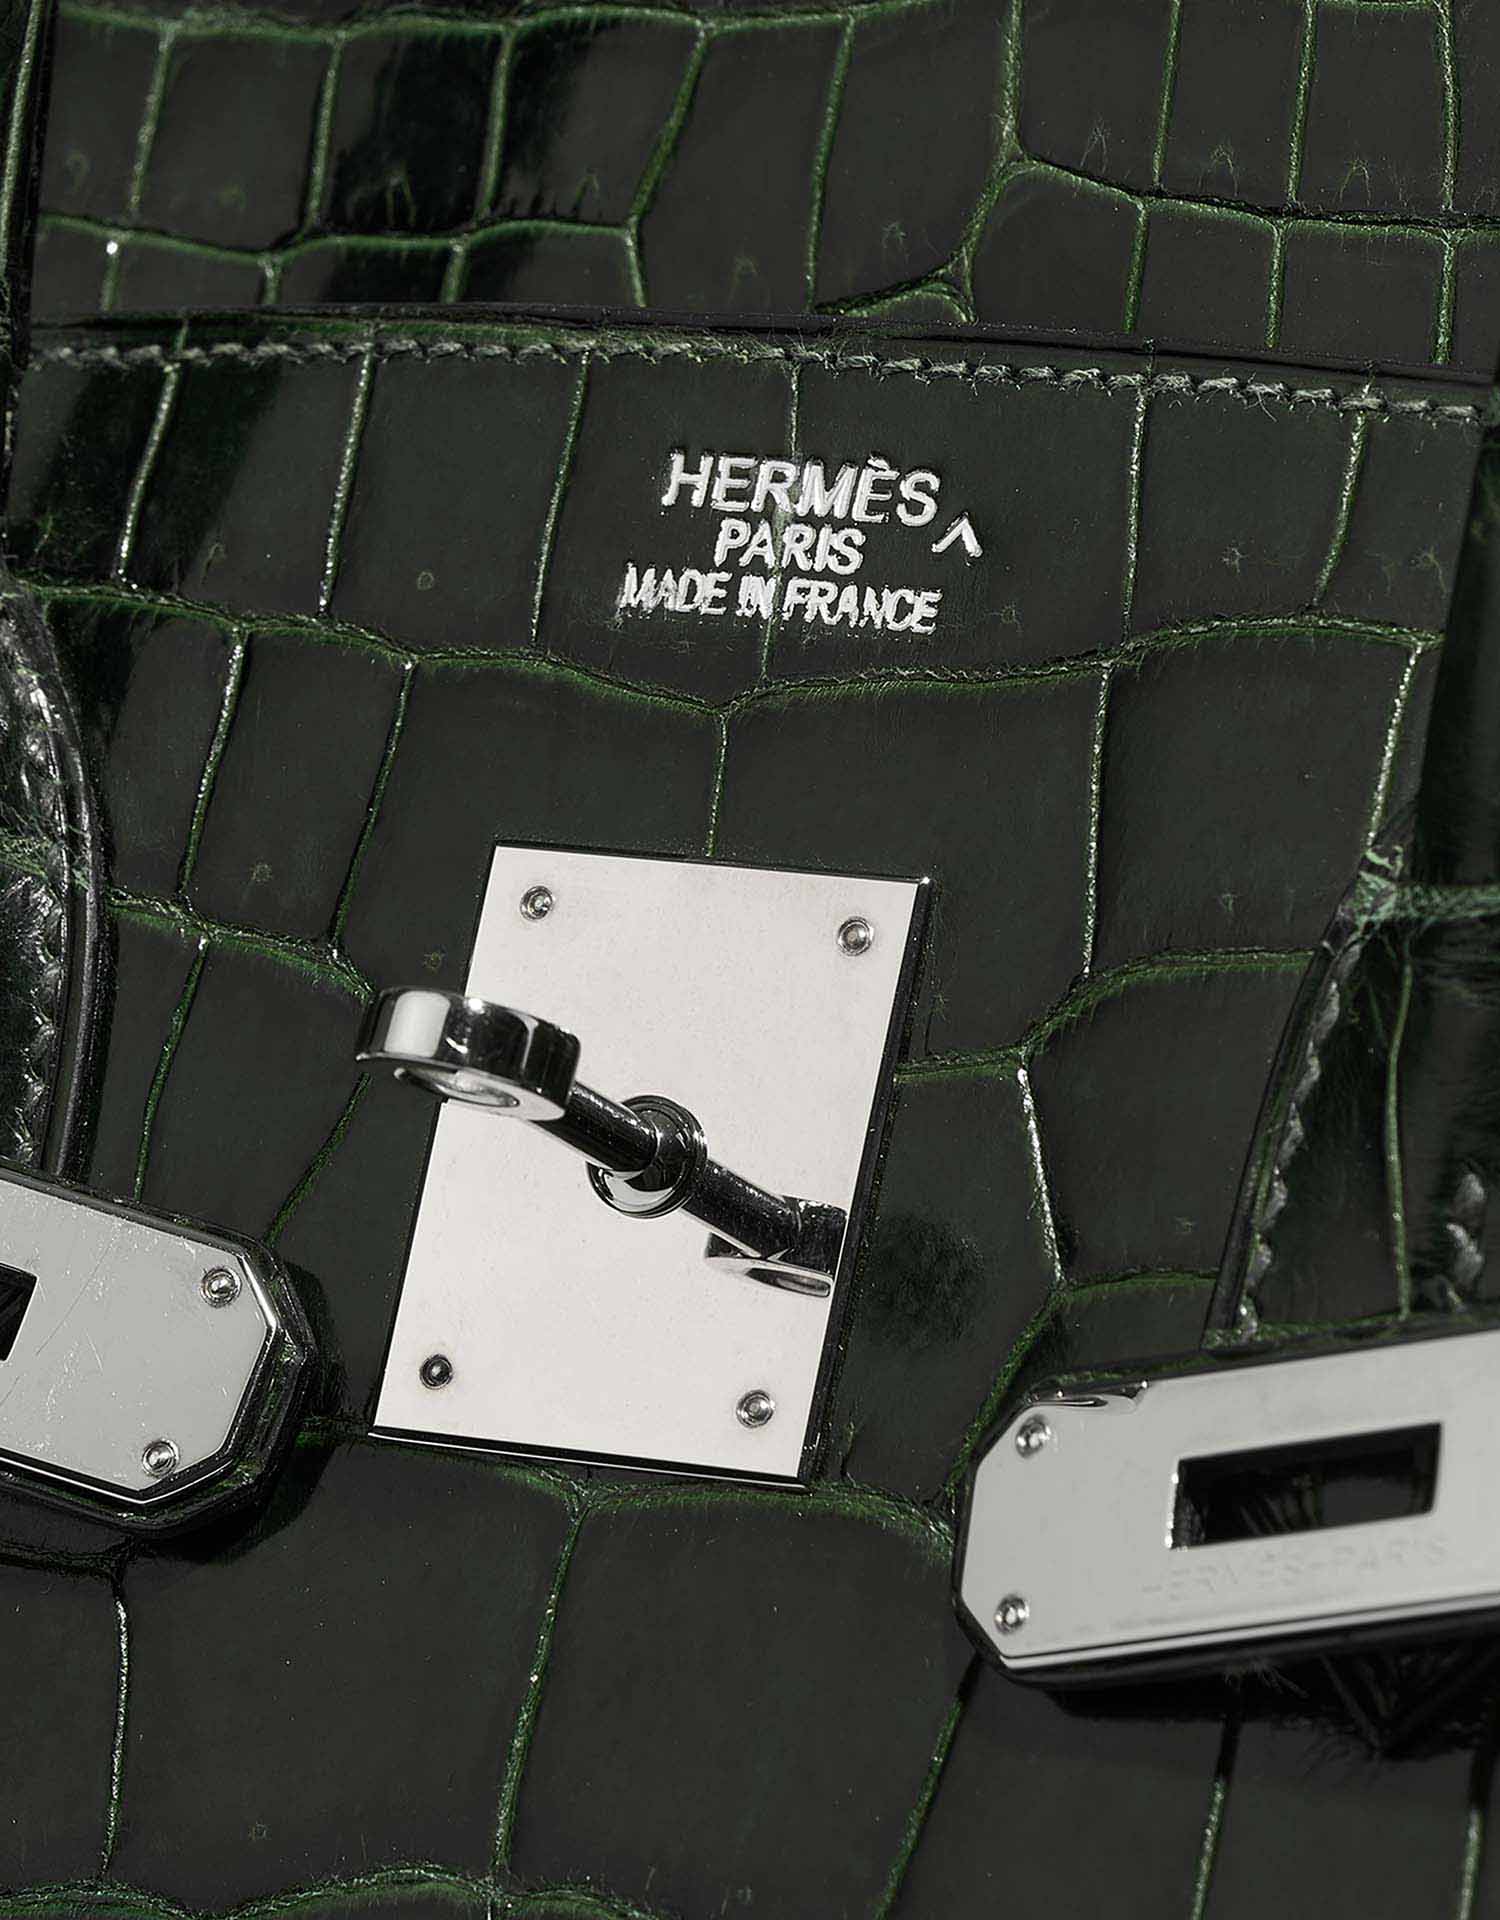 Pre-owned Hermès bag Birkin 35 Porosus Crocodile Vert Foncé Green | Sell your designer bag on Saclab.com